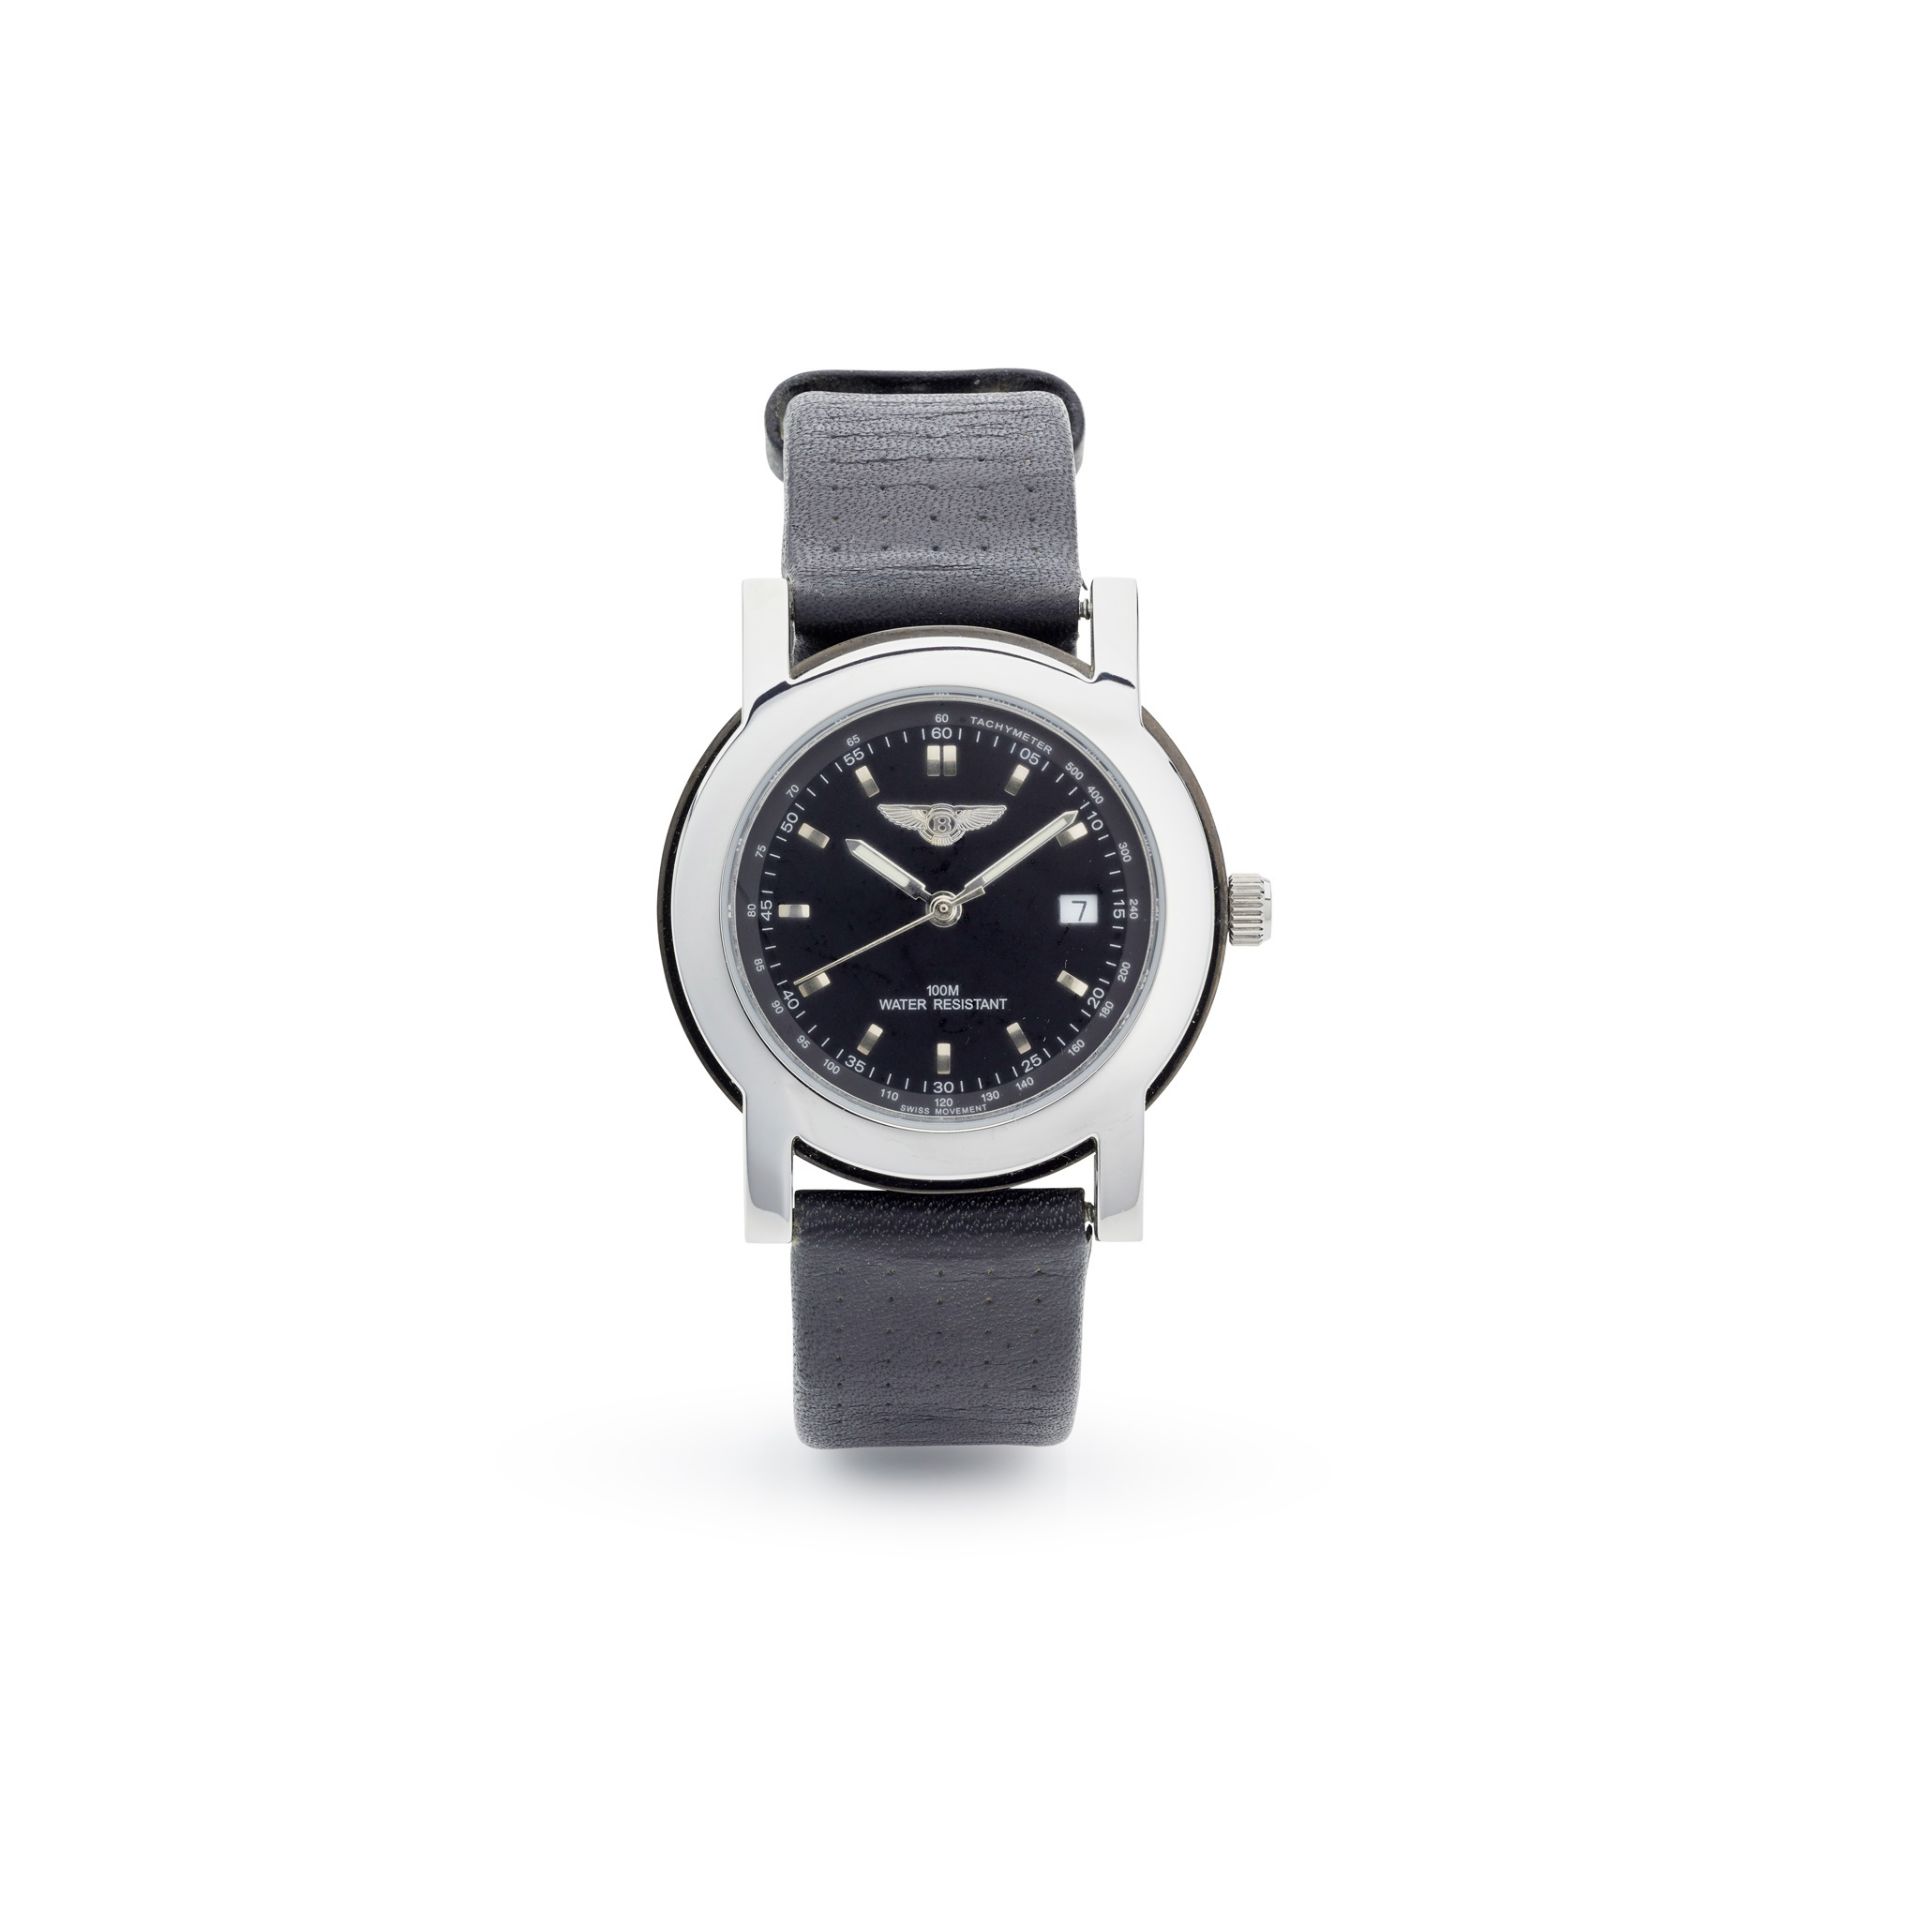 Bentley: a steel wrist watch